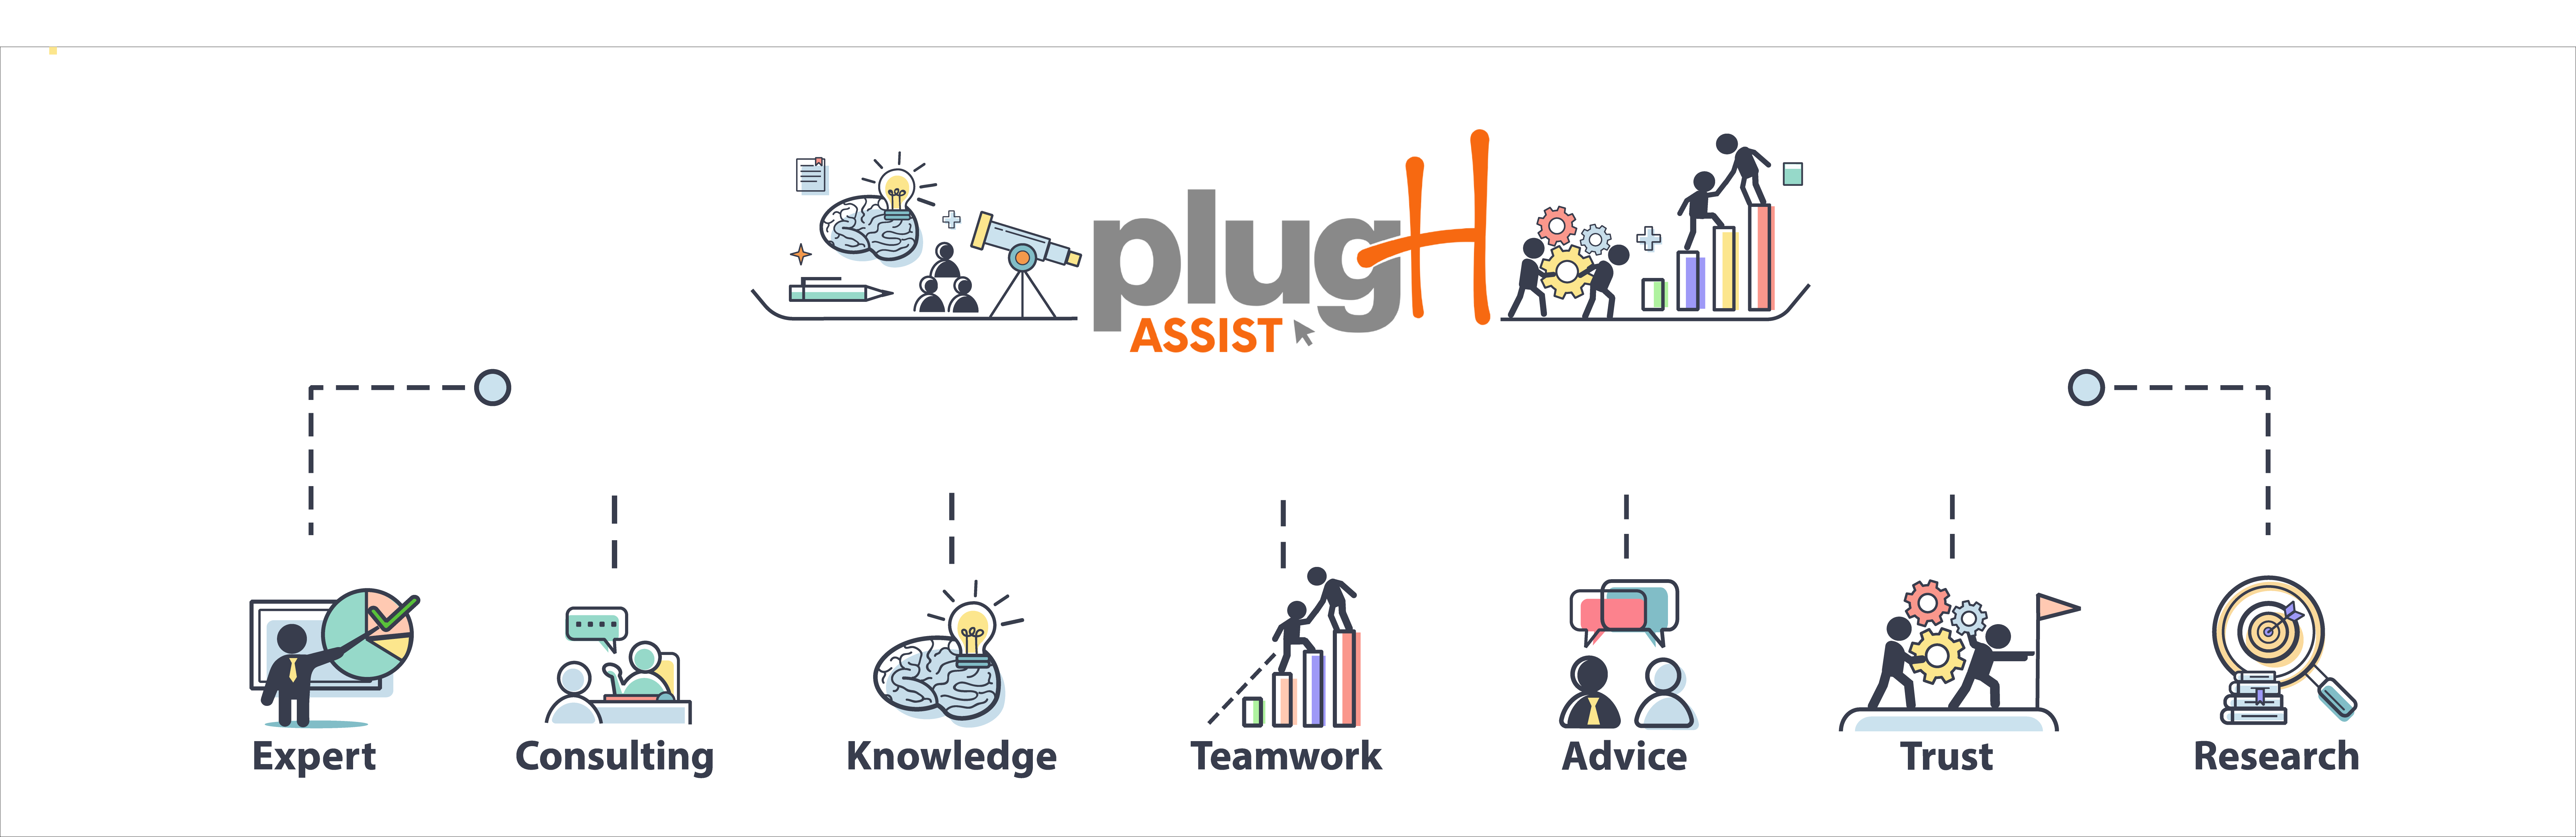 plugH Assist banner image